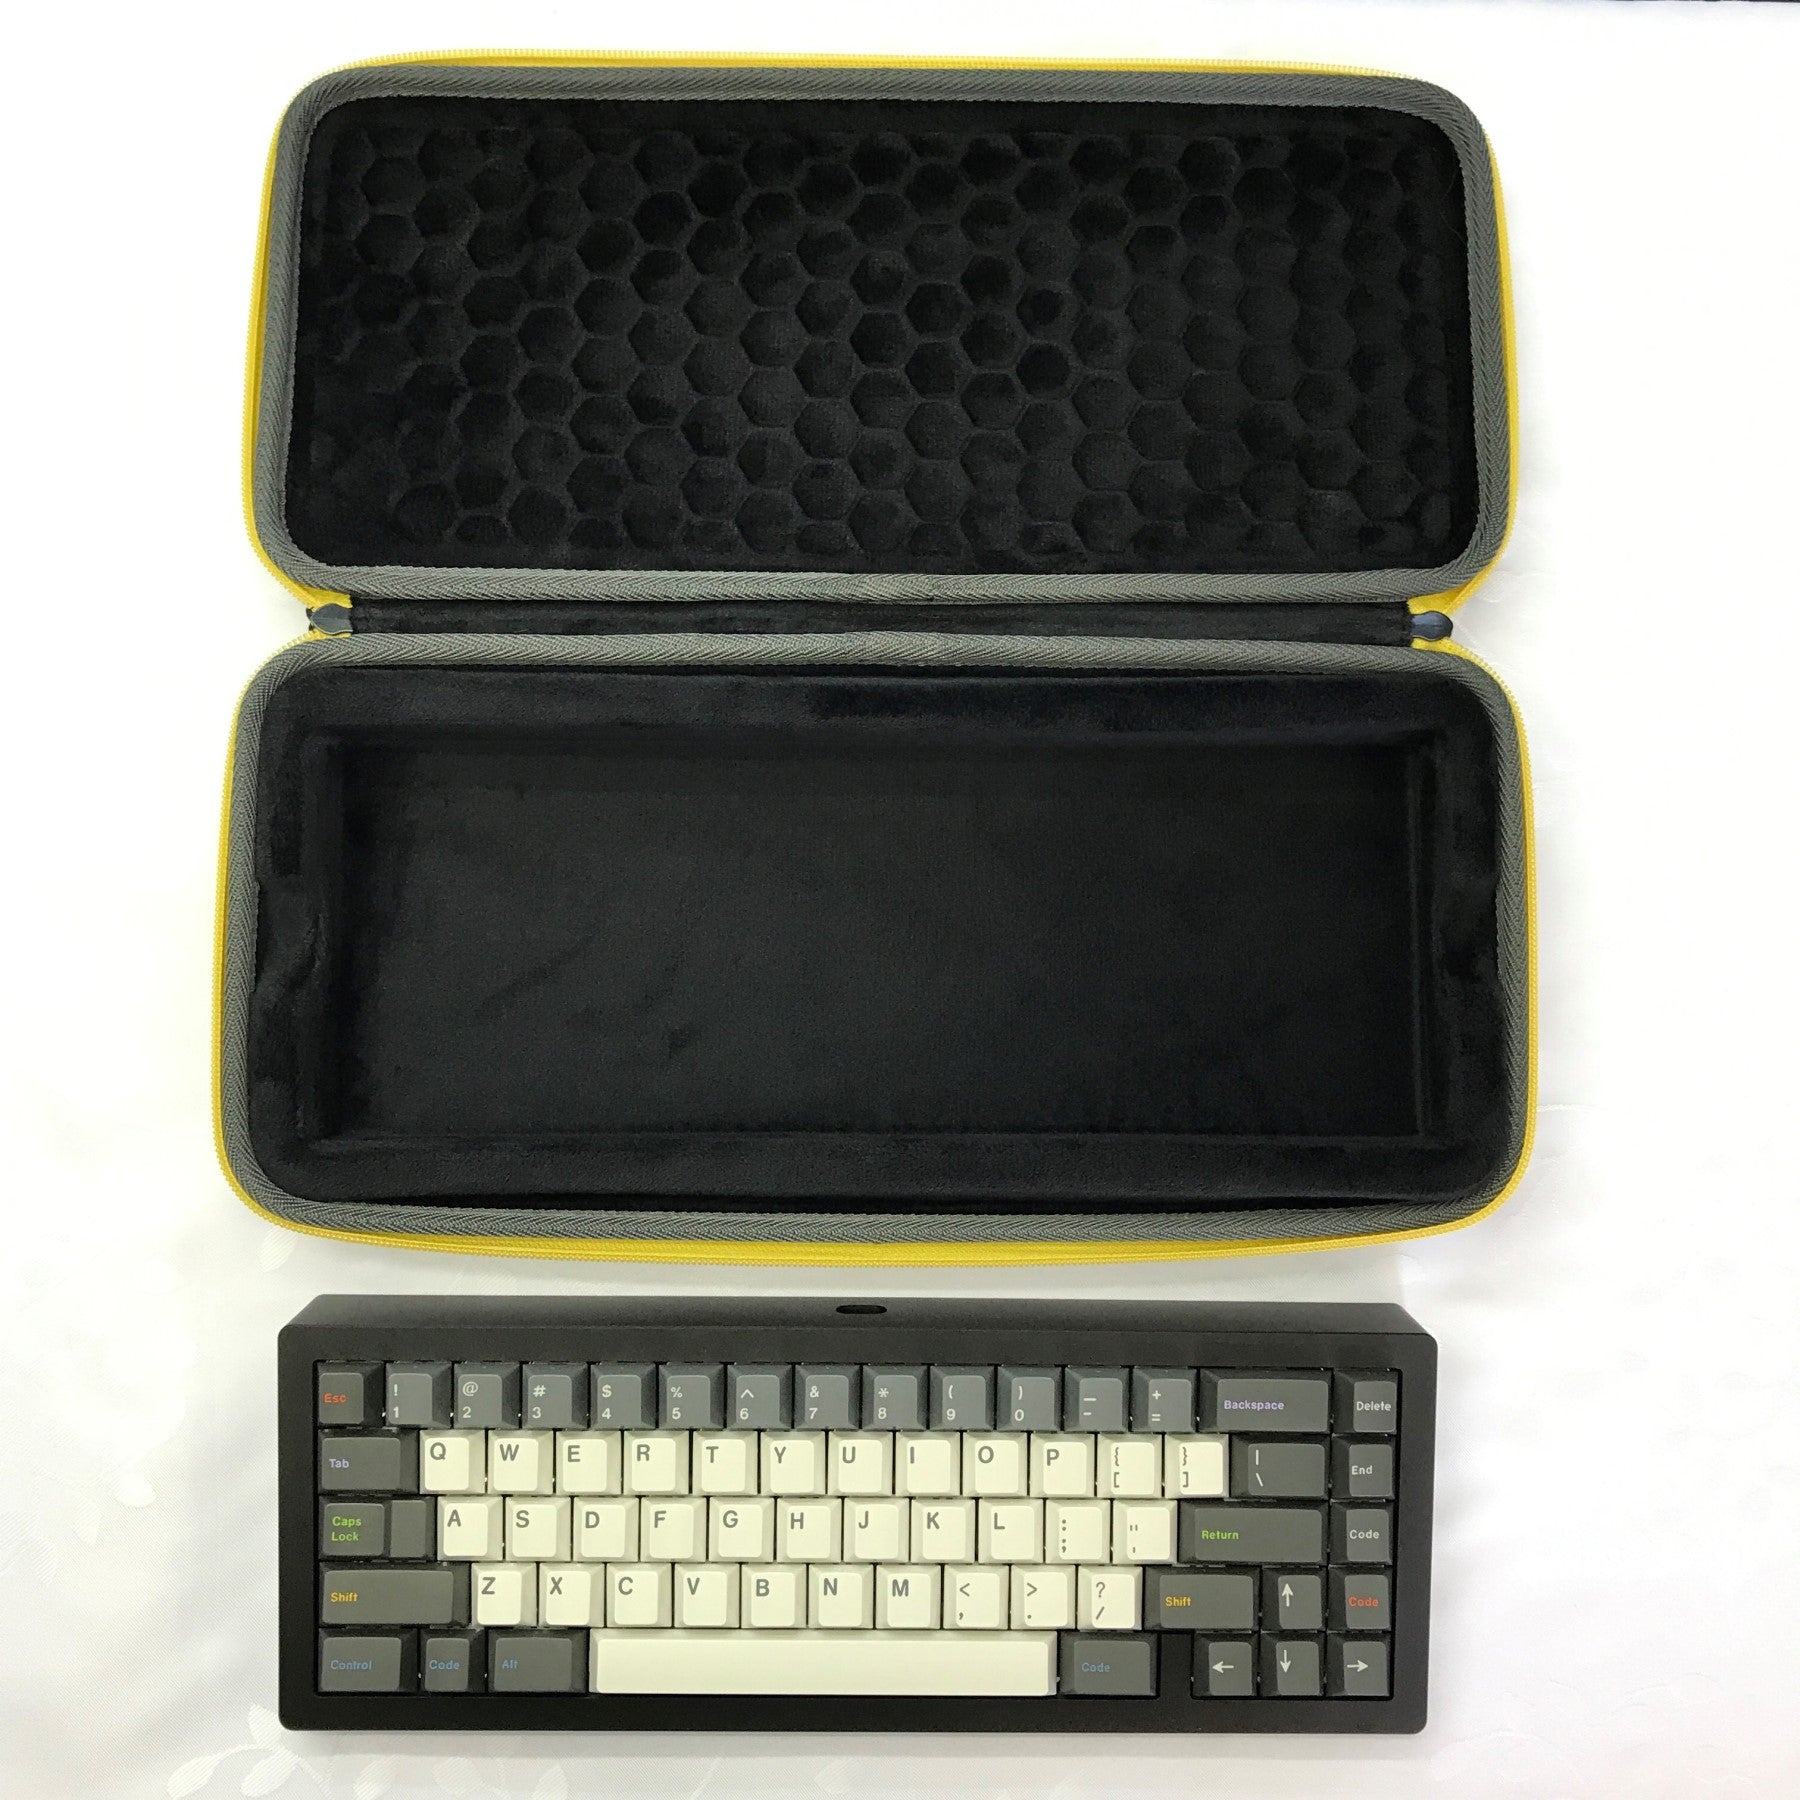 KEYGEM Keyboard Carrying Case